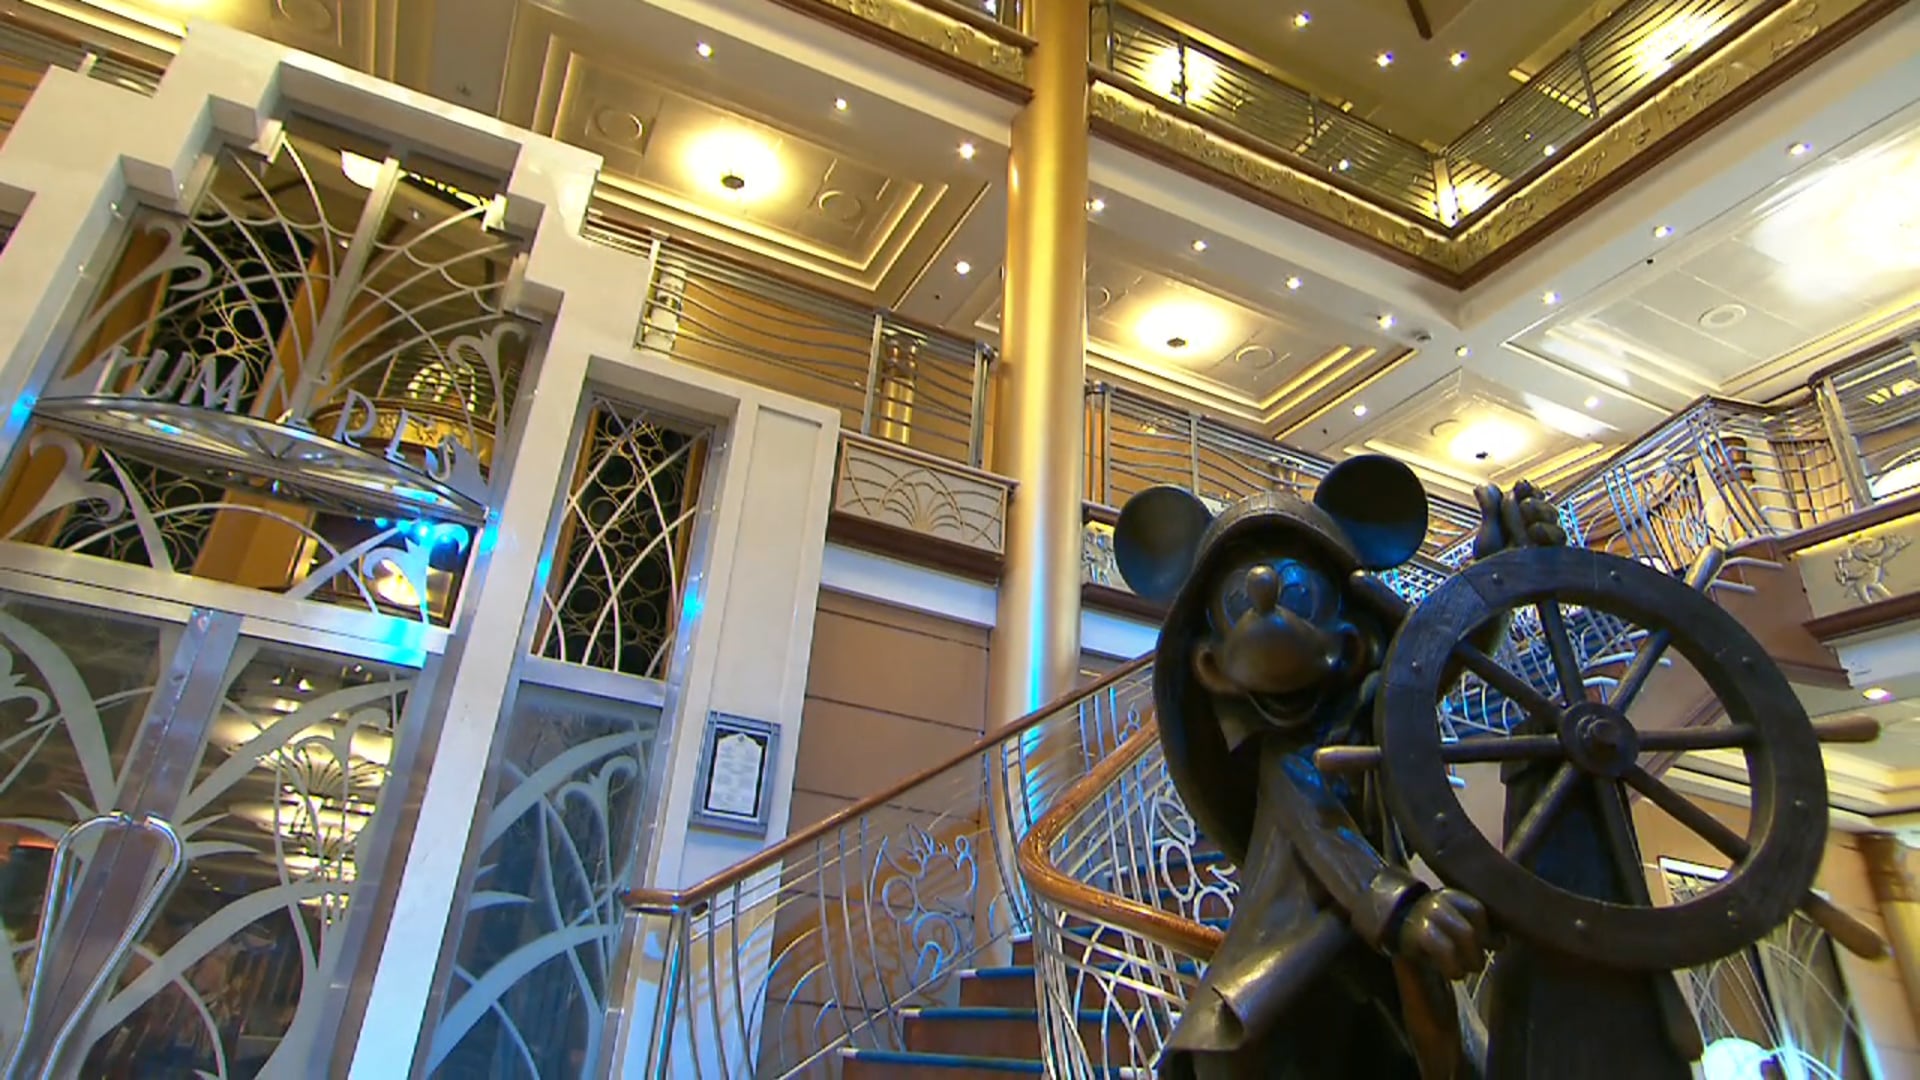 Minnie Mouse on atrium